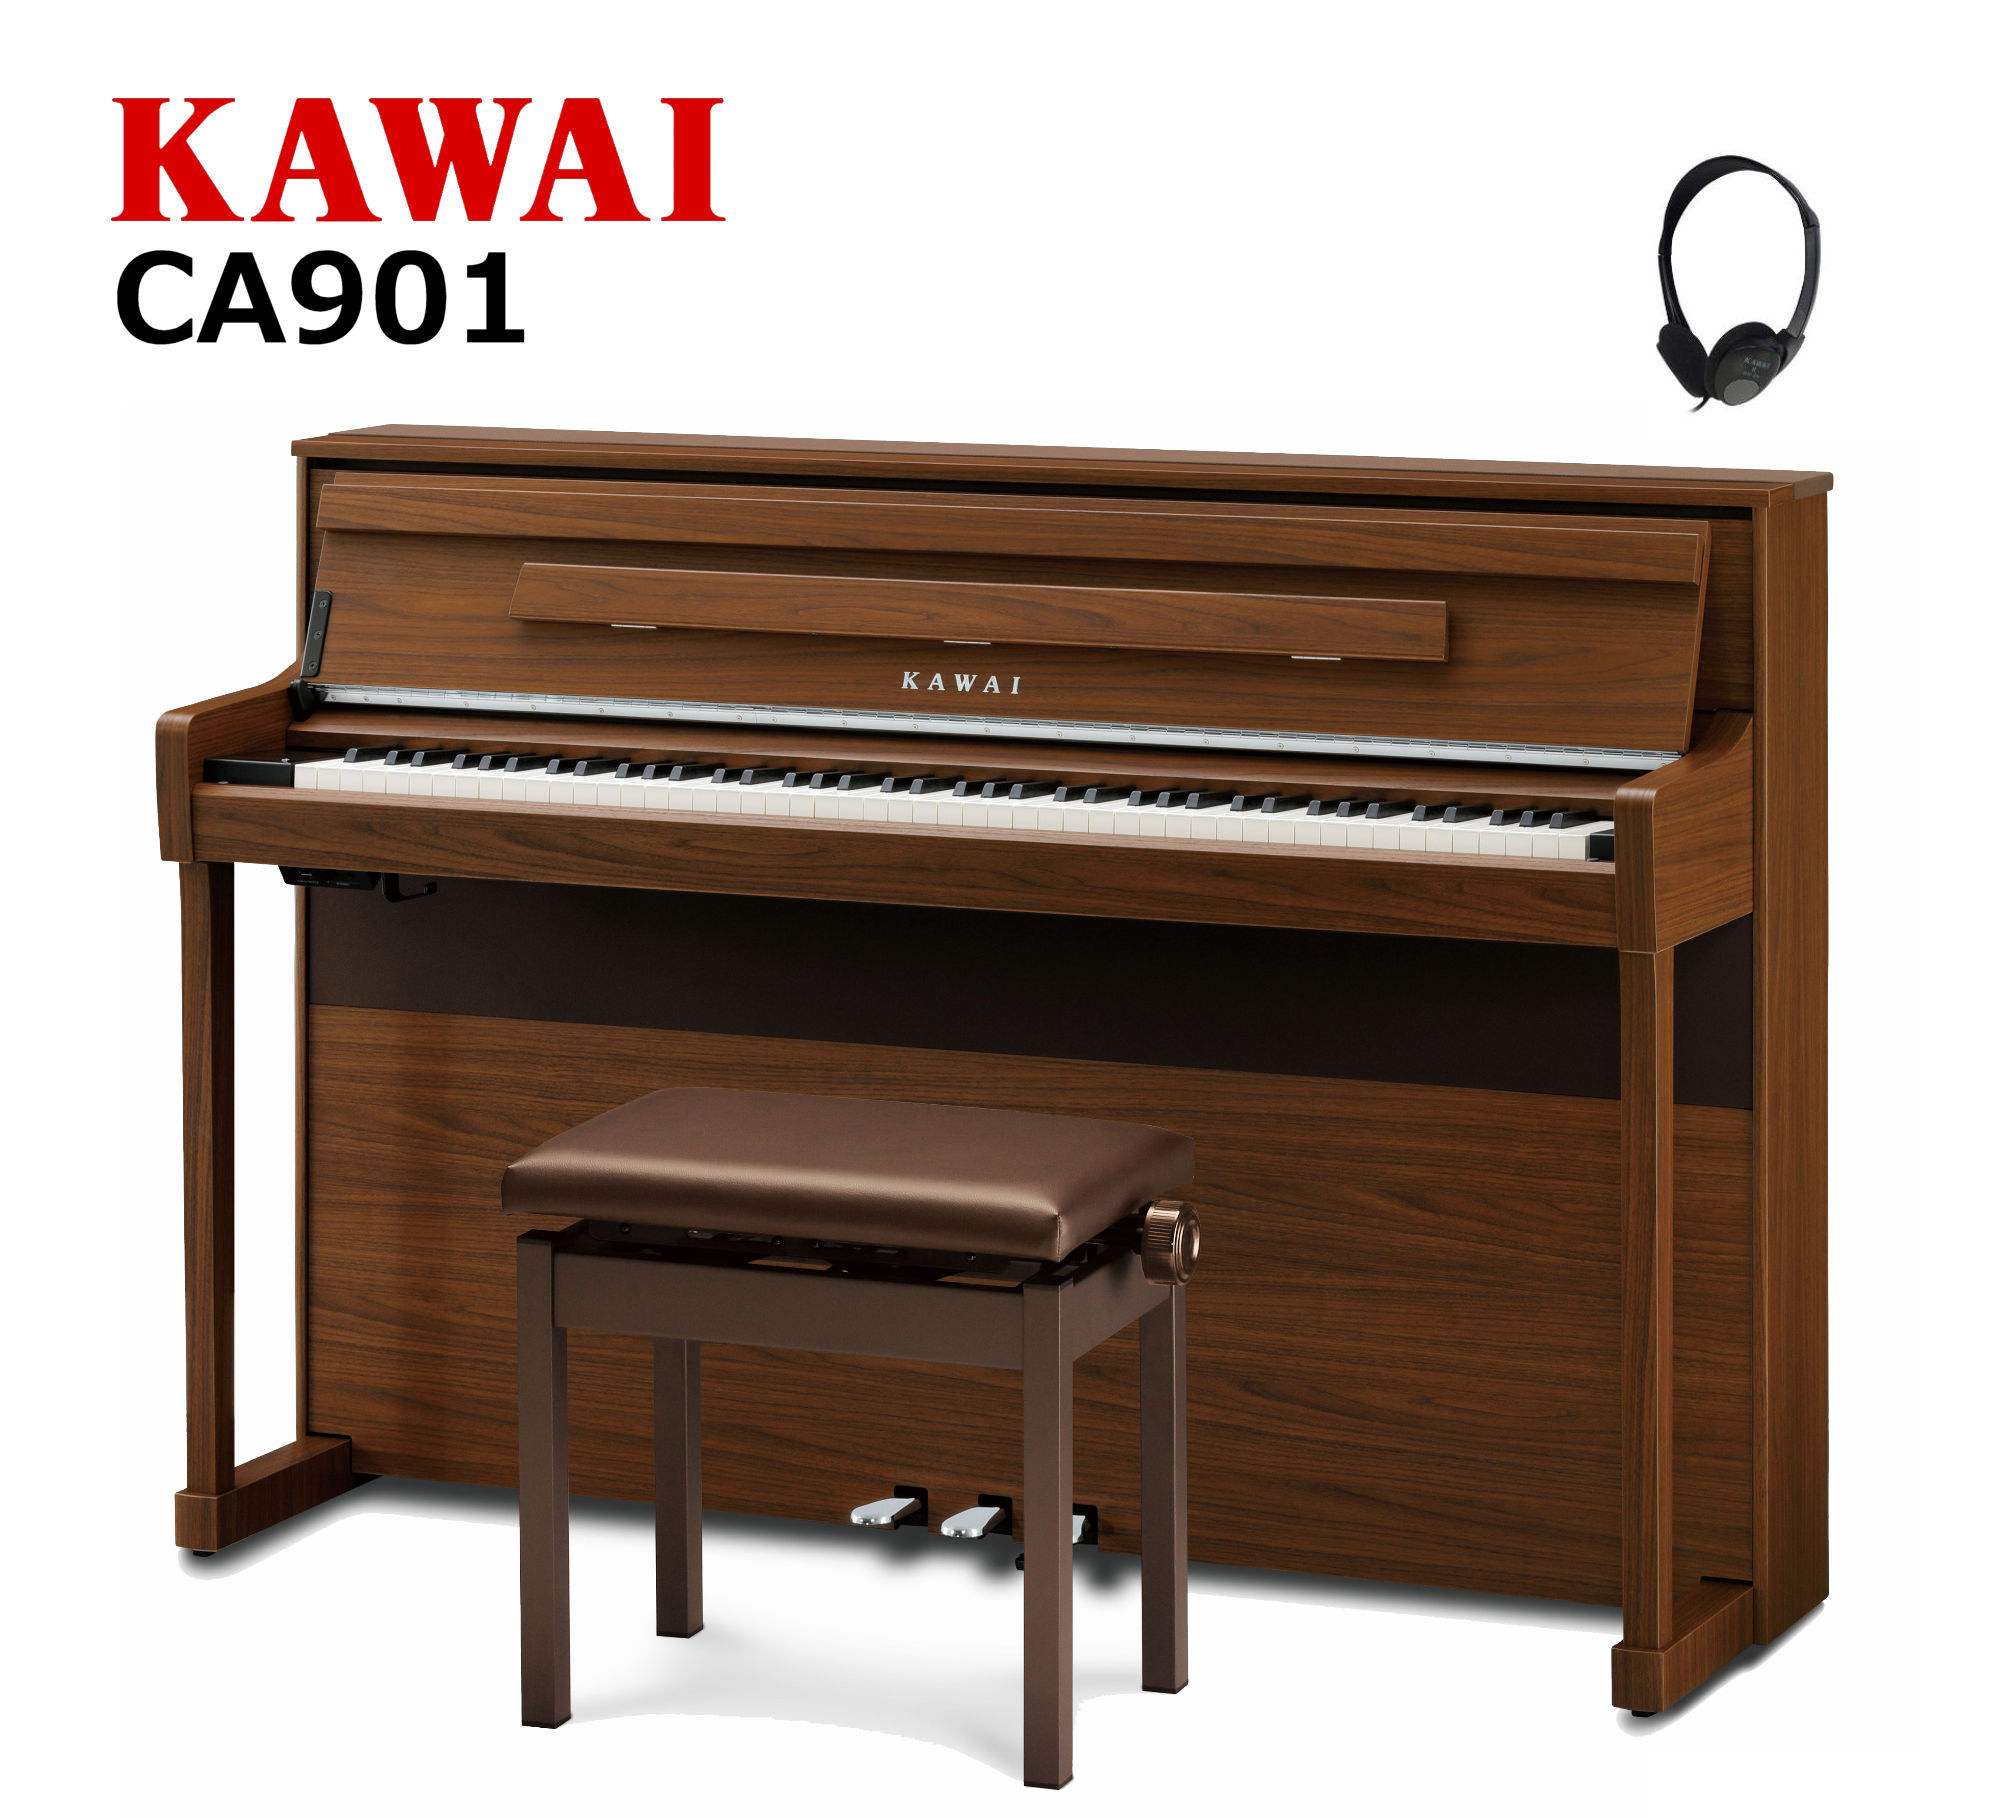 KAWAI カワイ DigitalPiano 電子ピアノ 88鍵 木製鍵盤 響板スピーカー搭載 CA901 NW ナチュラルウォルナット調仕上げ